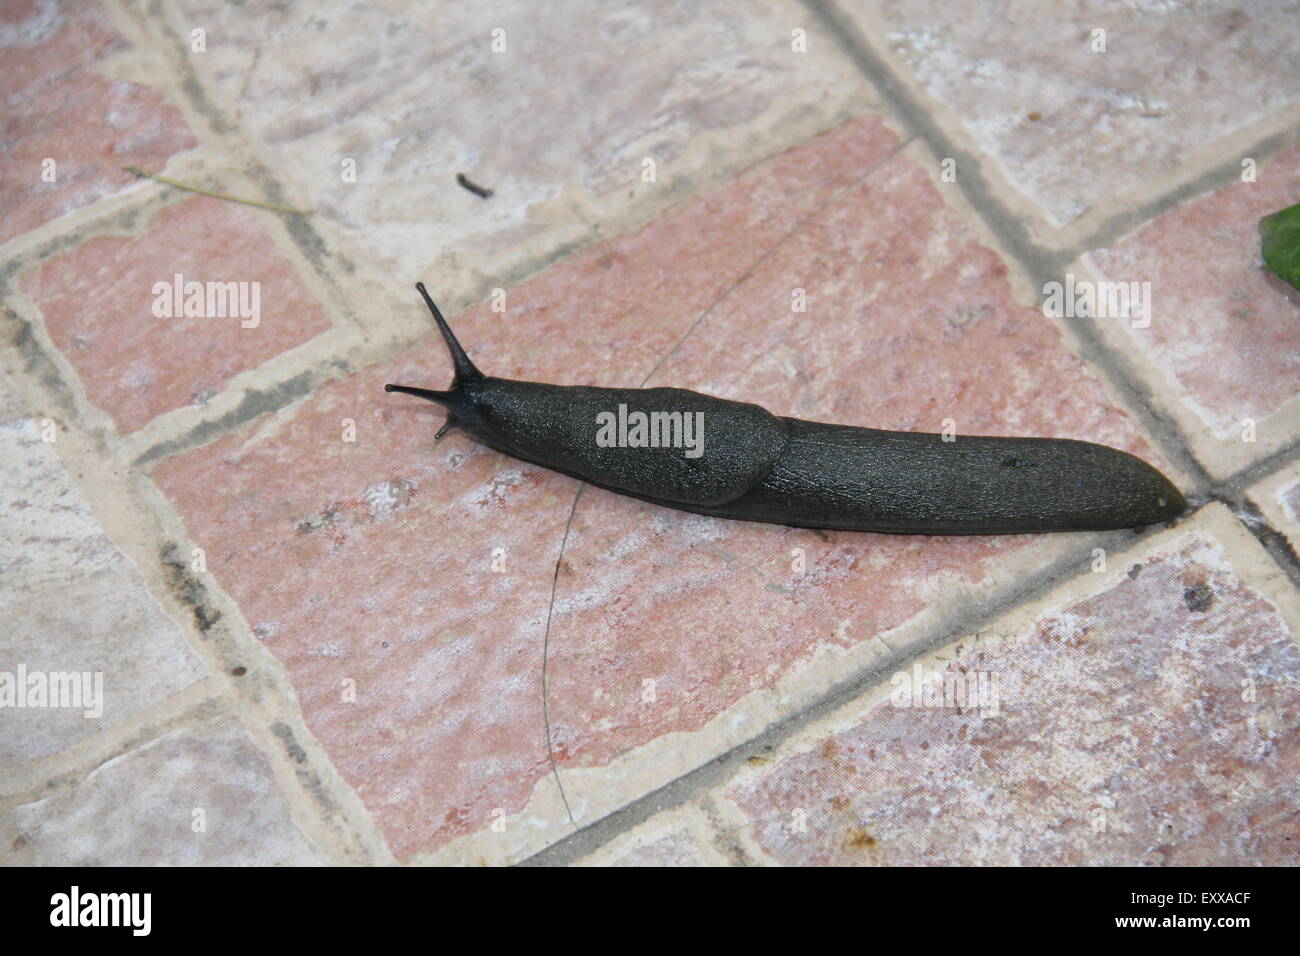 Slug crawling on a stone path in the park Stock Photo